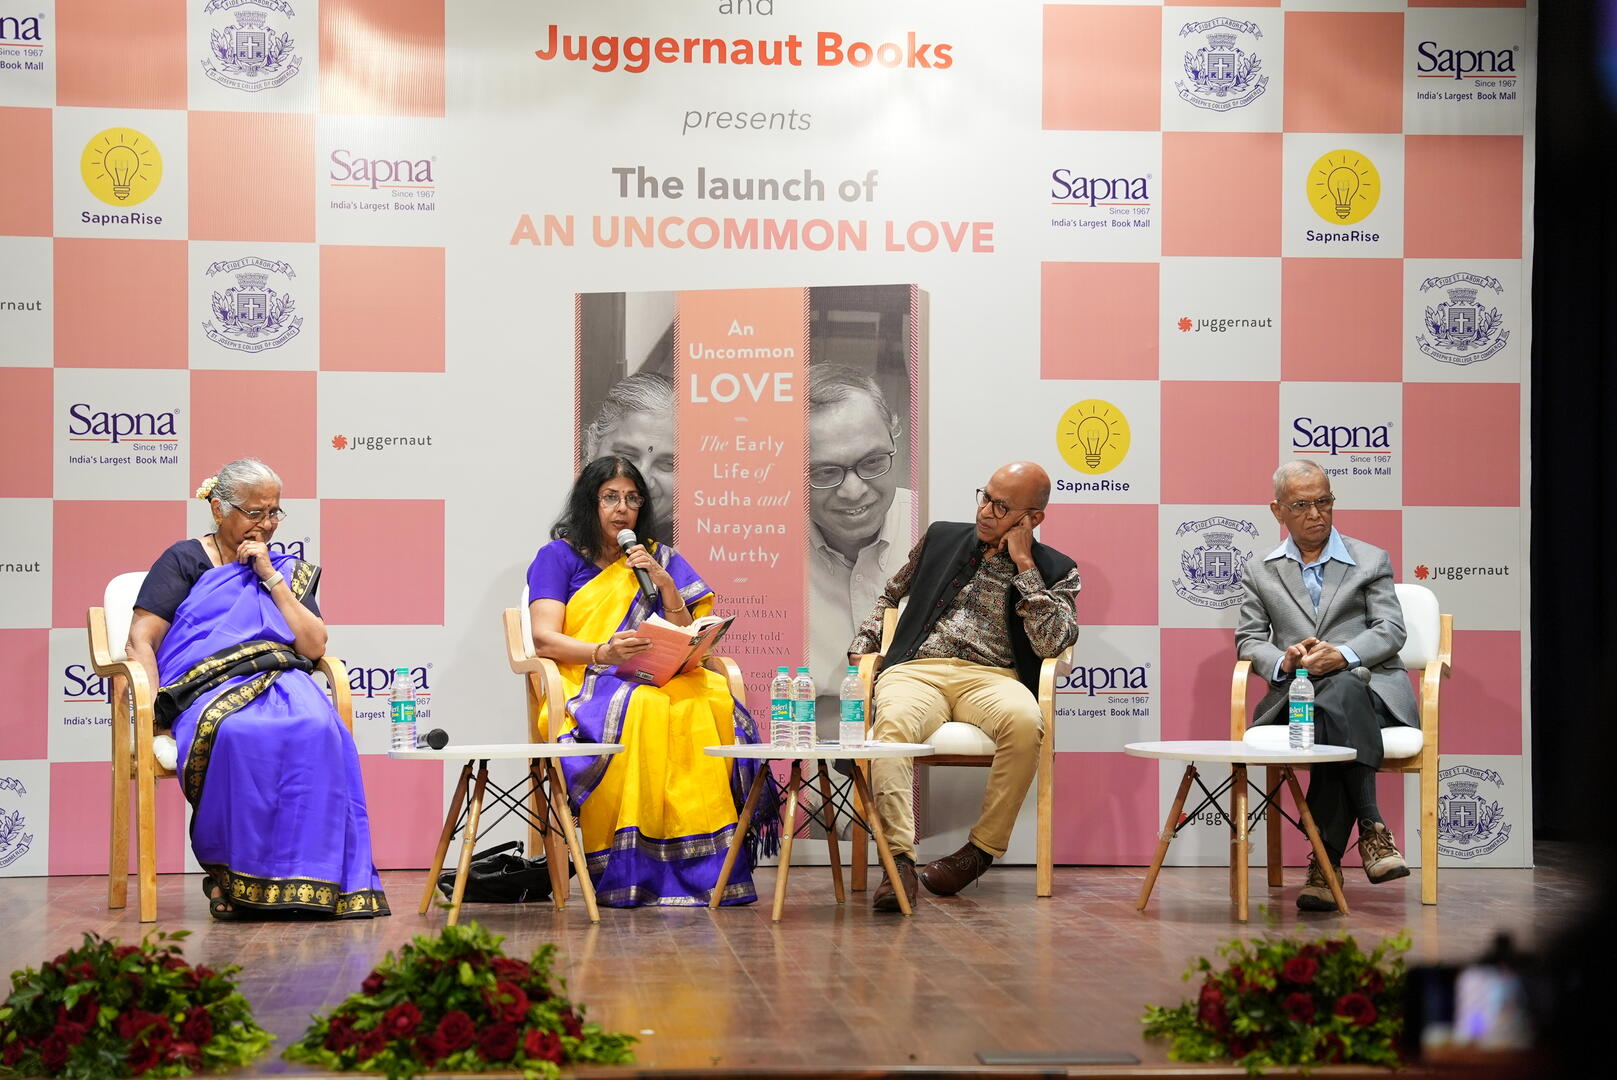 Celebrating 50 Years of Love, Sapna Book House and Juggernaut Books Launch 'An Uncommon Love’ on Sudha and Narayana Murthy's 46th Anniversary